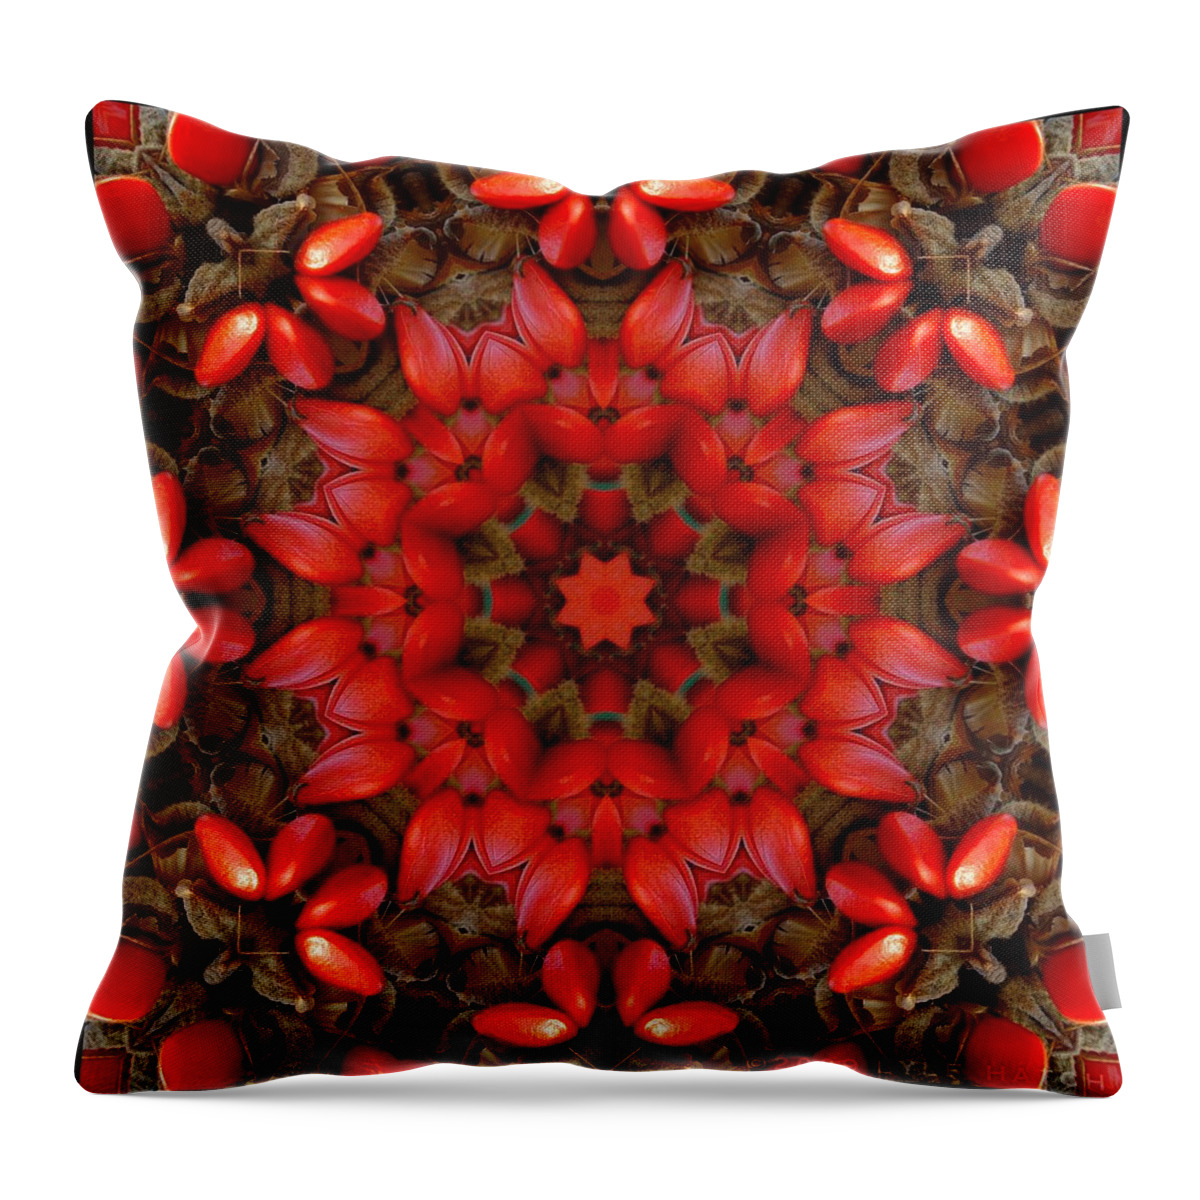 Kaleidoscope Throw Pillow featuring the digital art Red Kaleidoscope No. 1 by Lyle Hatch